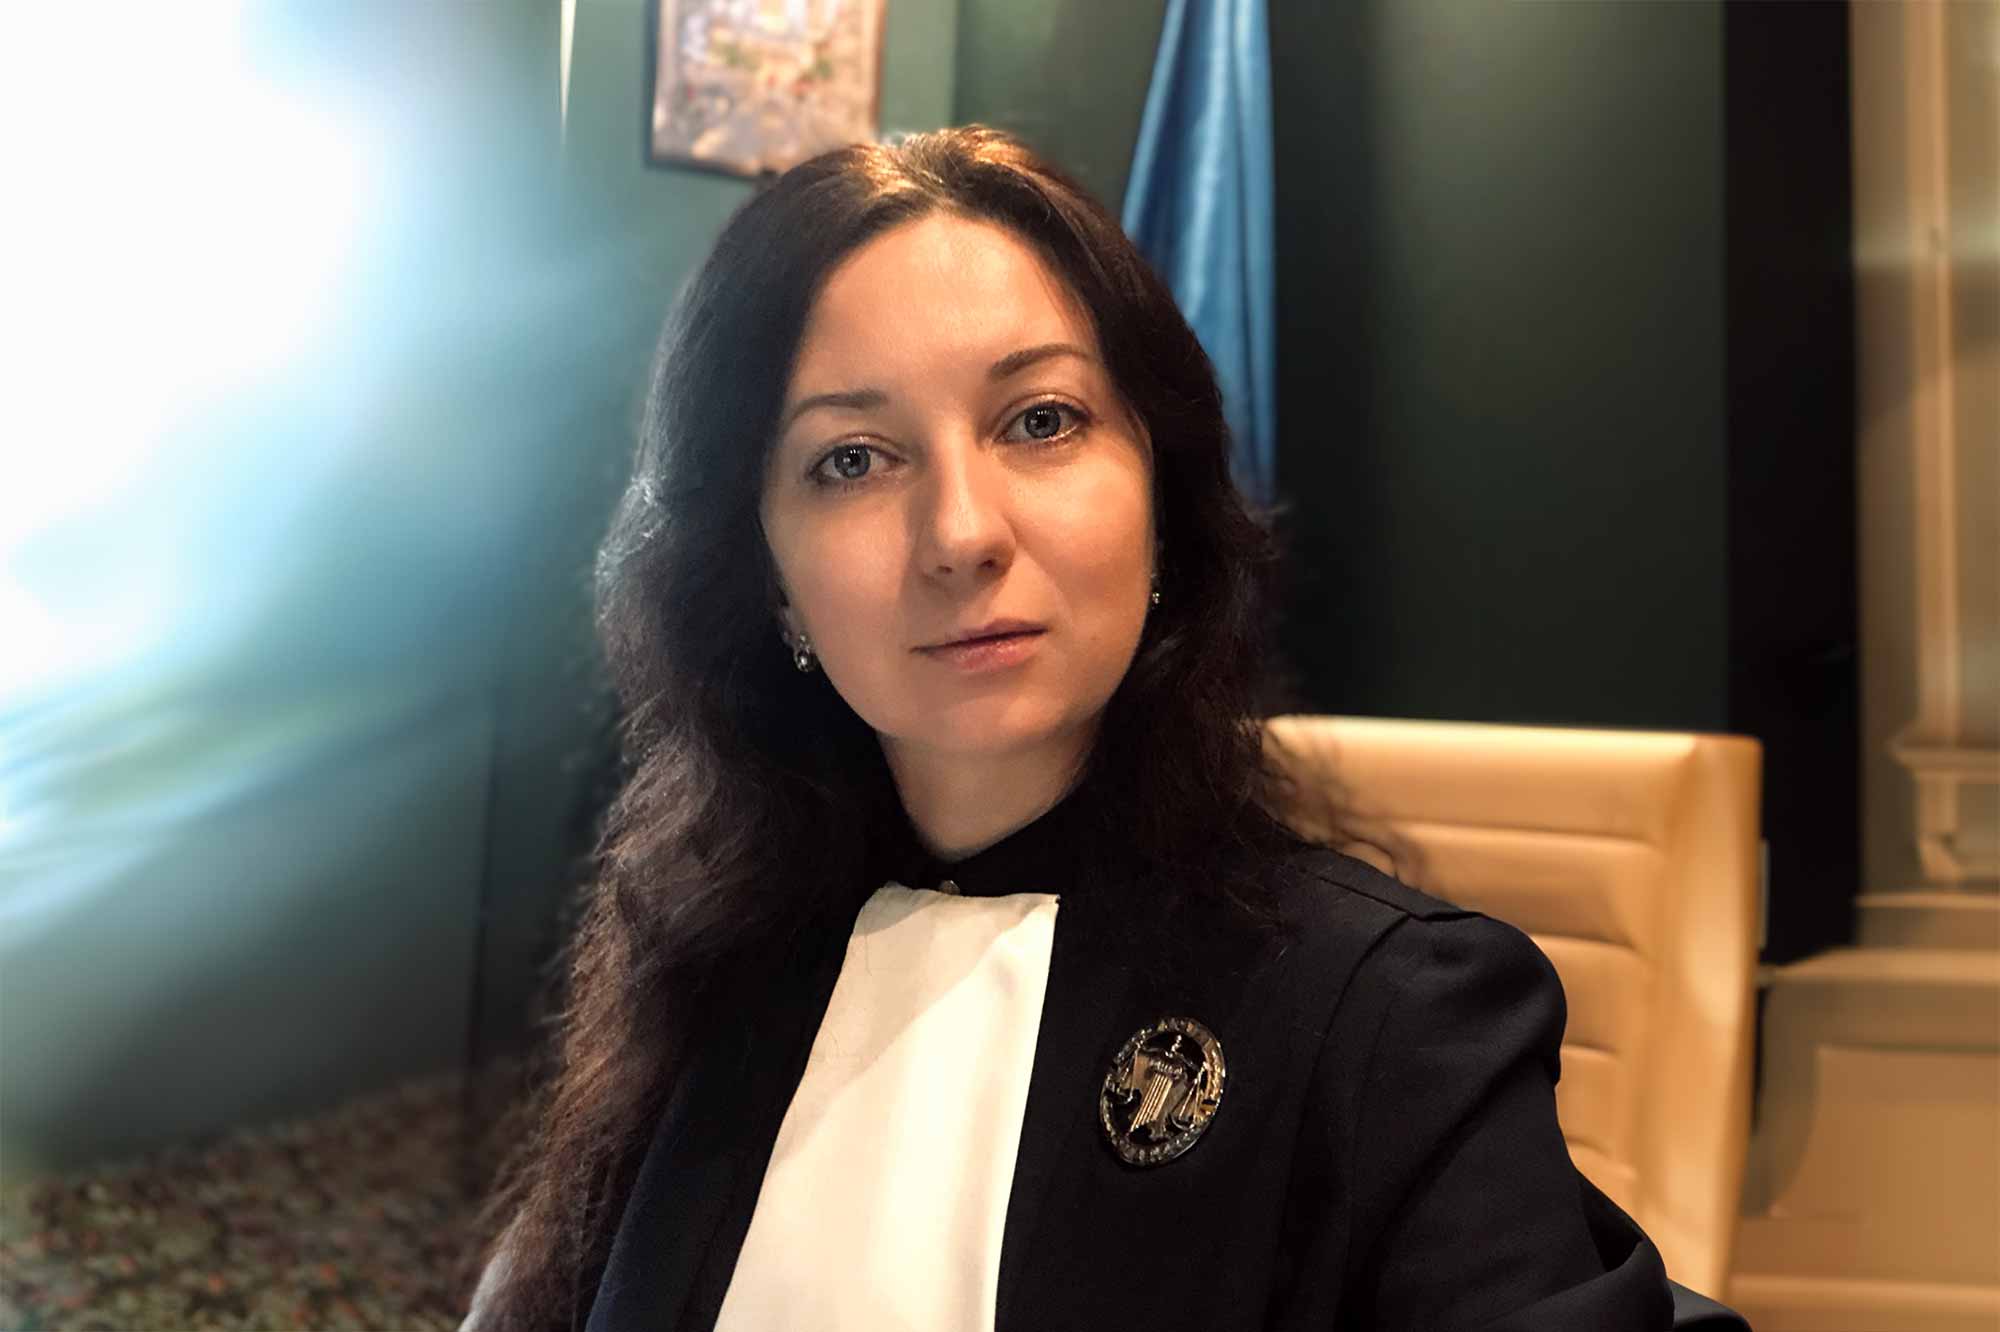 Maryna Bondarenko, a Judge of the Darnytskyi district court of Kyiv. Photo courtesy of M. Bondarenko